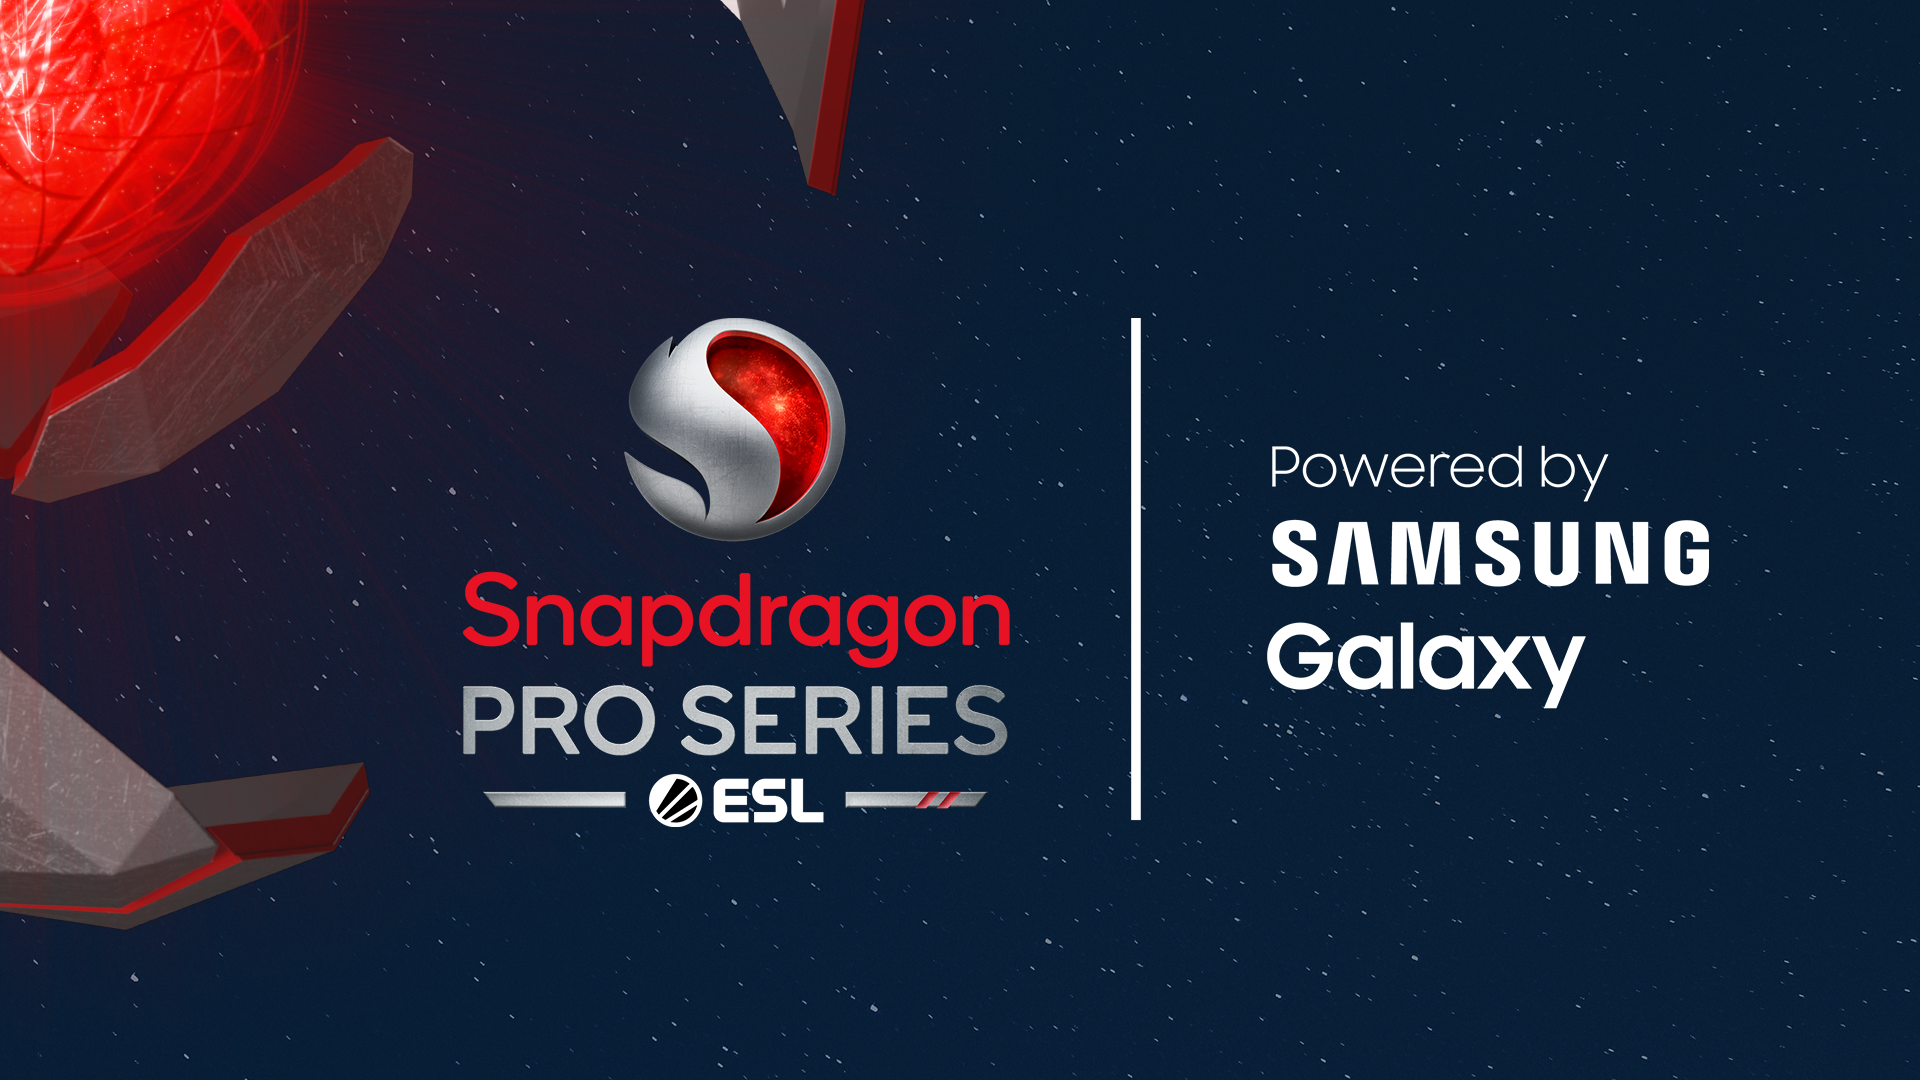 Samsung Named Official Smartphone Partner of Snapdragon Pro Series